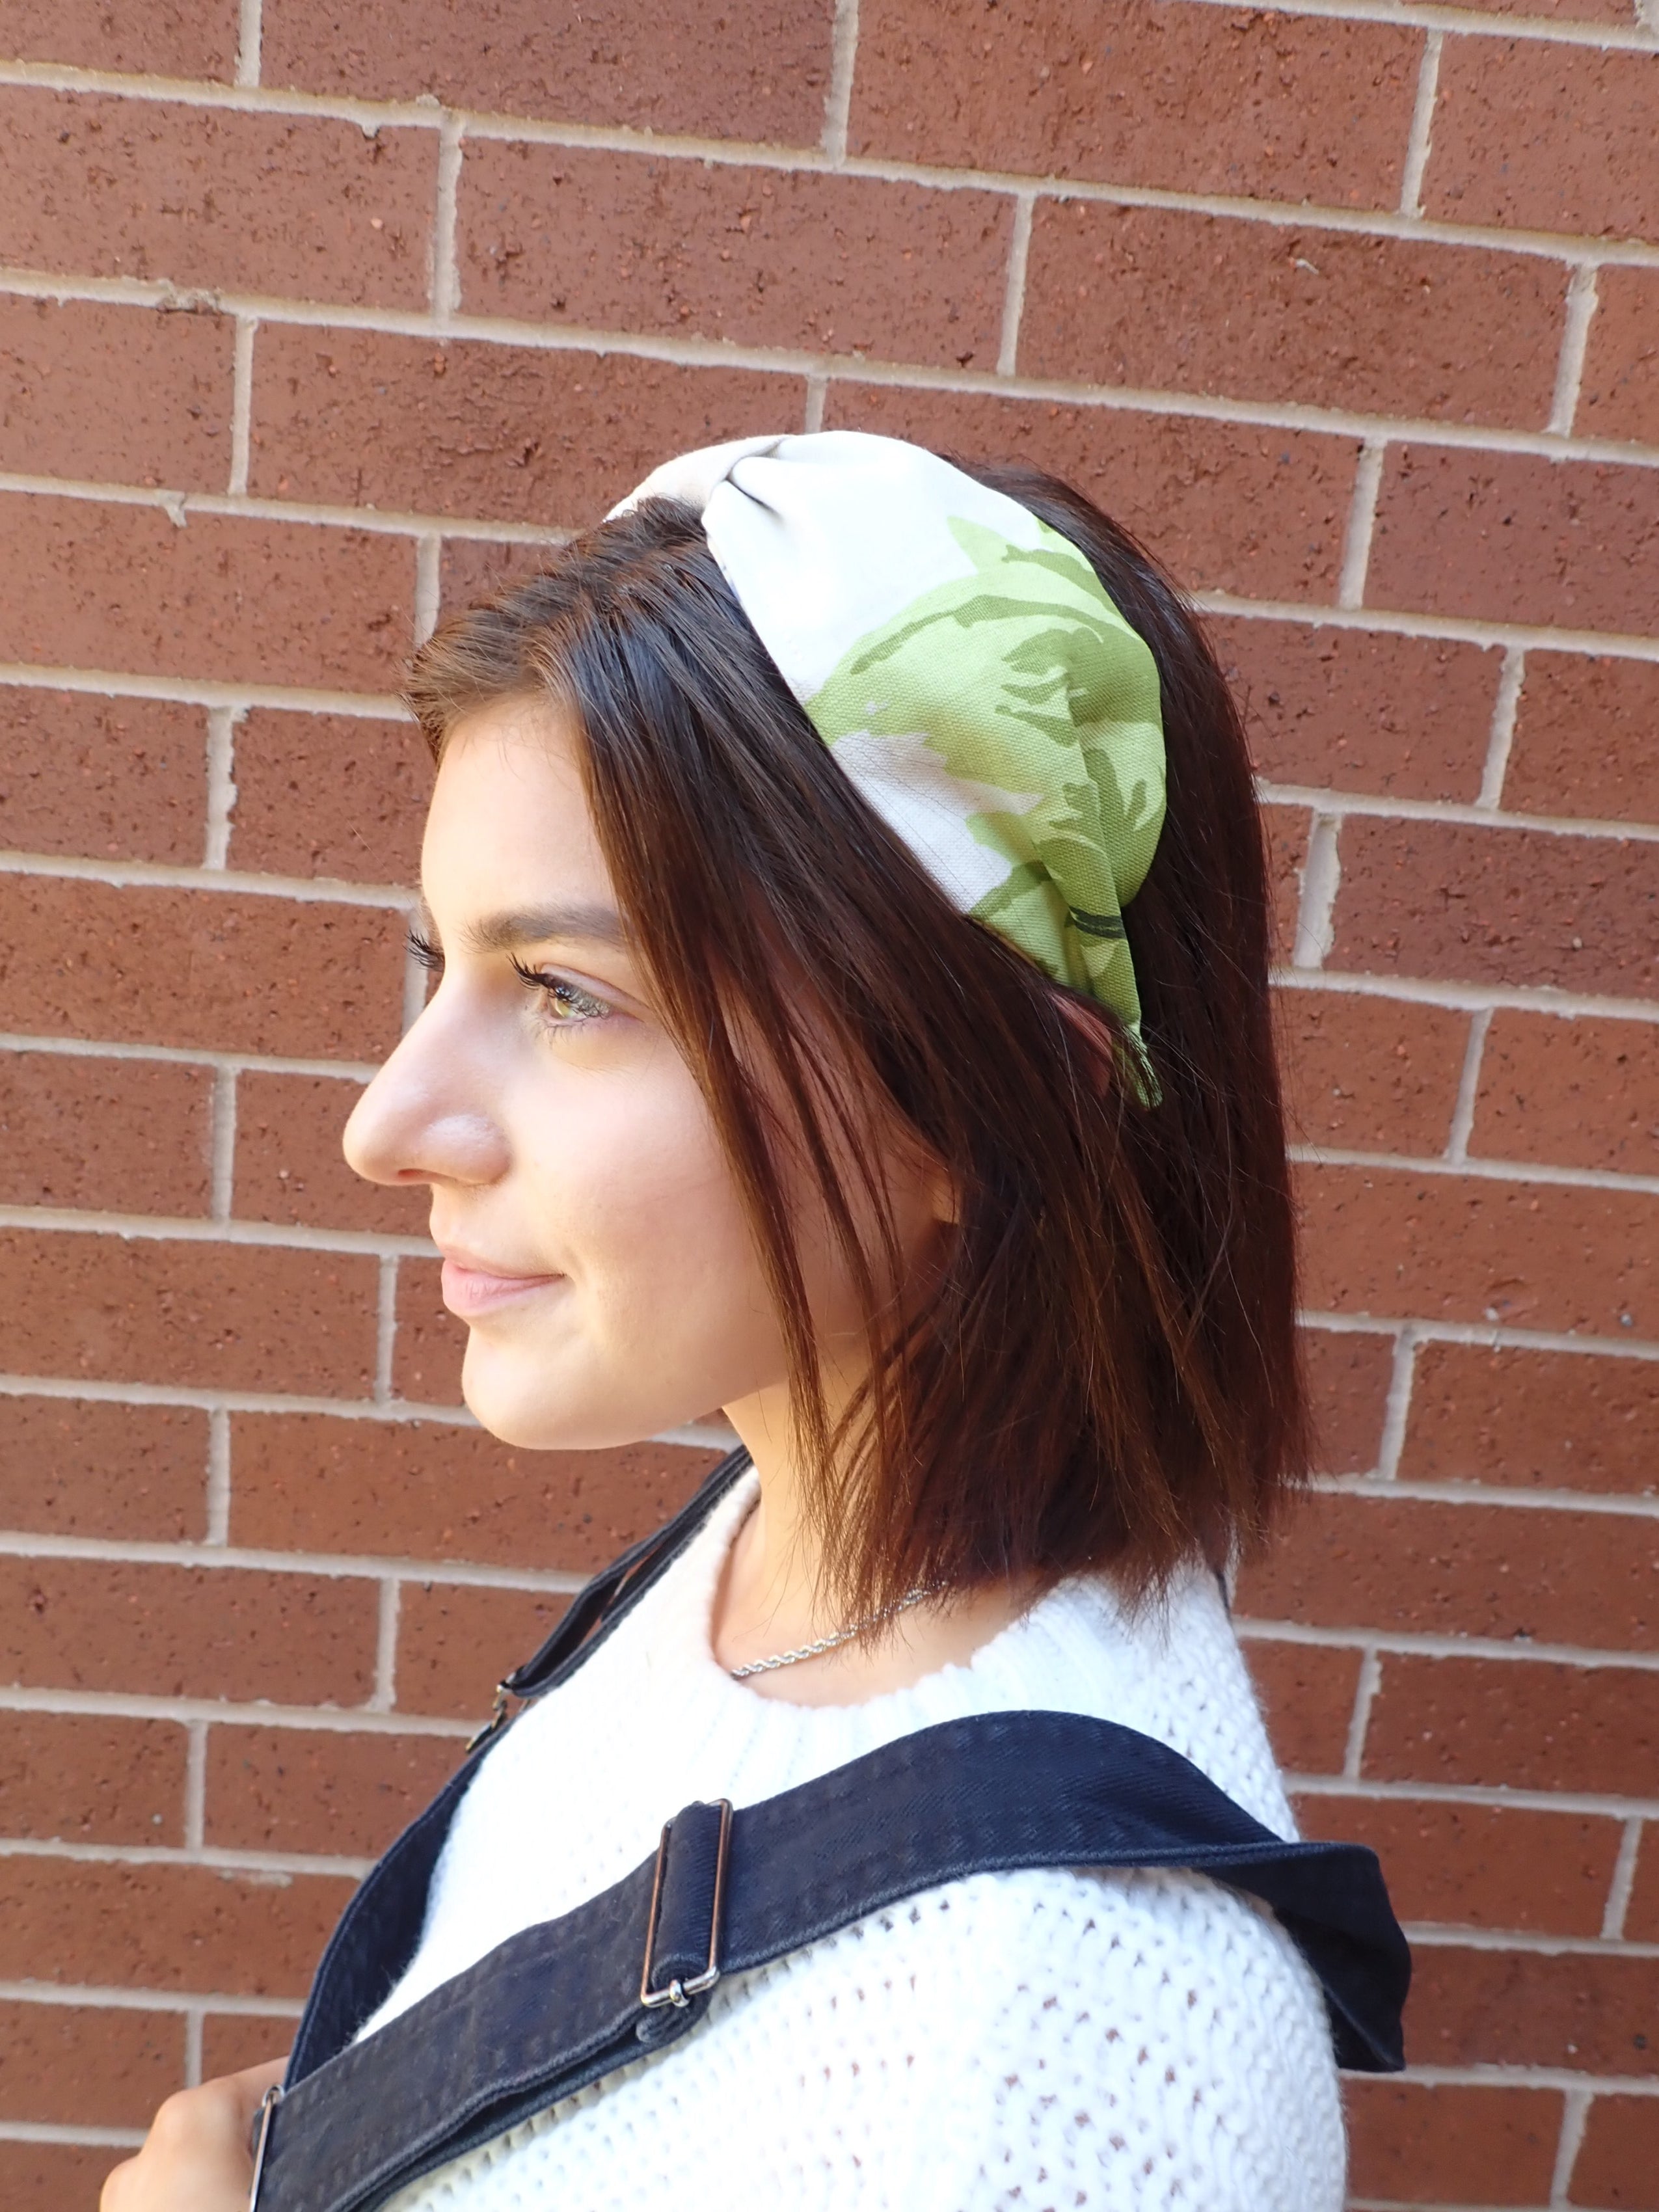 Ladies Chic Linen Turban Headband. Repurposed Fabric Headband Hat Accessory.